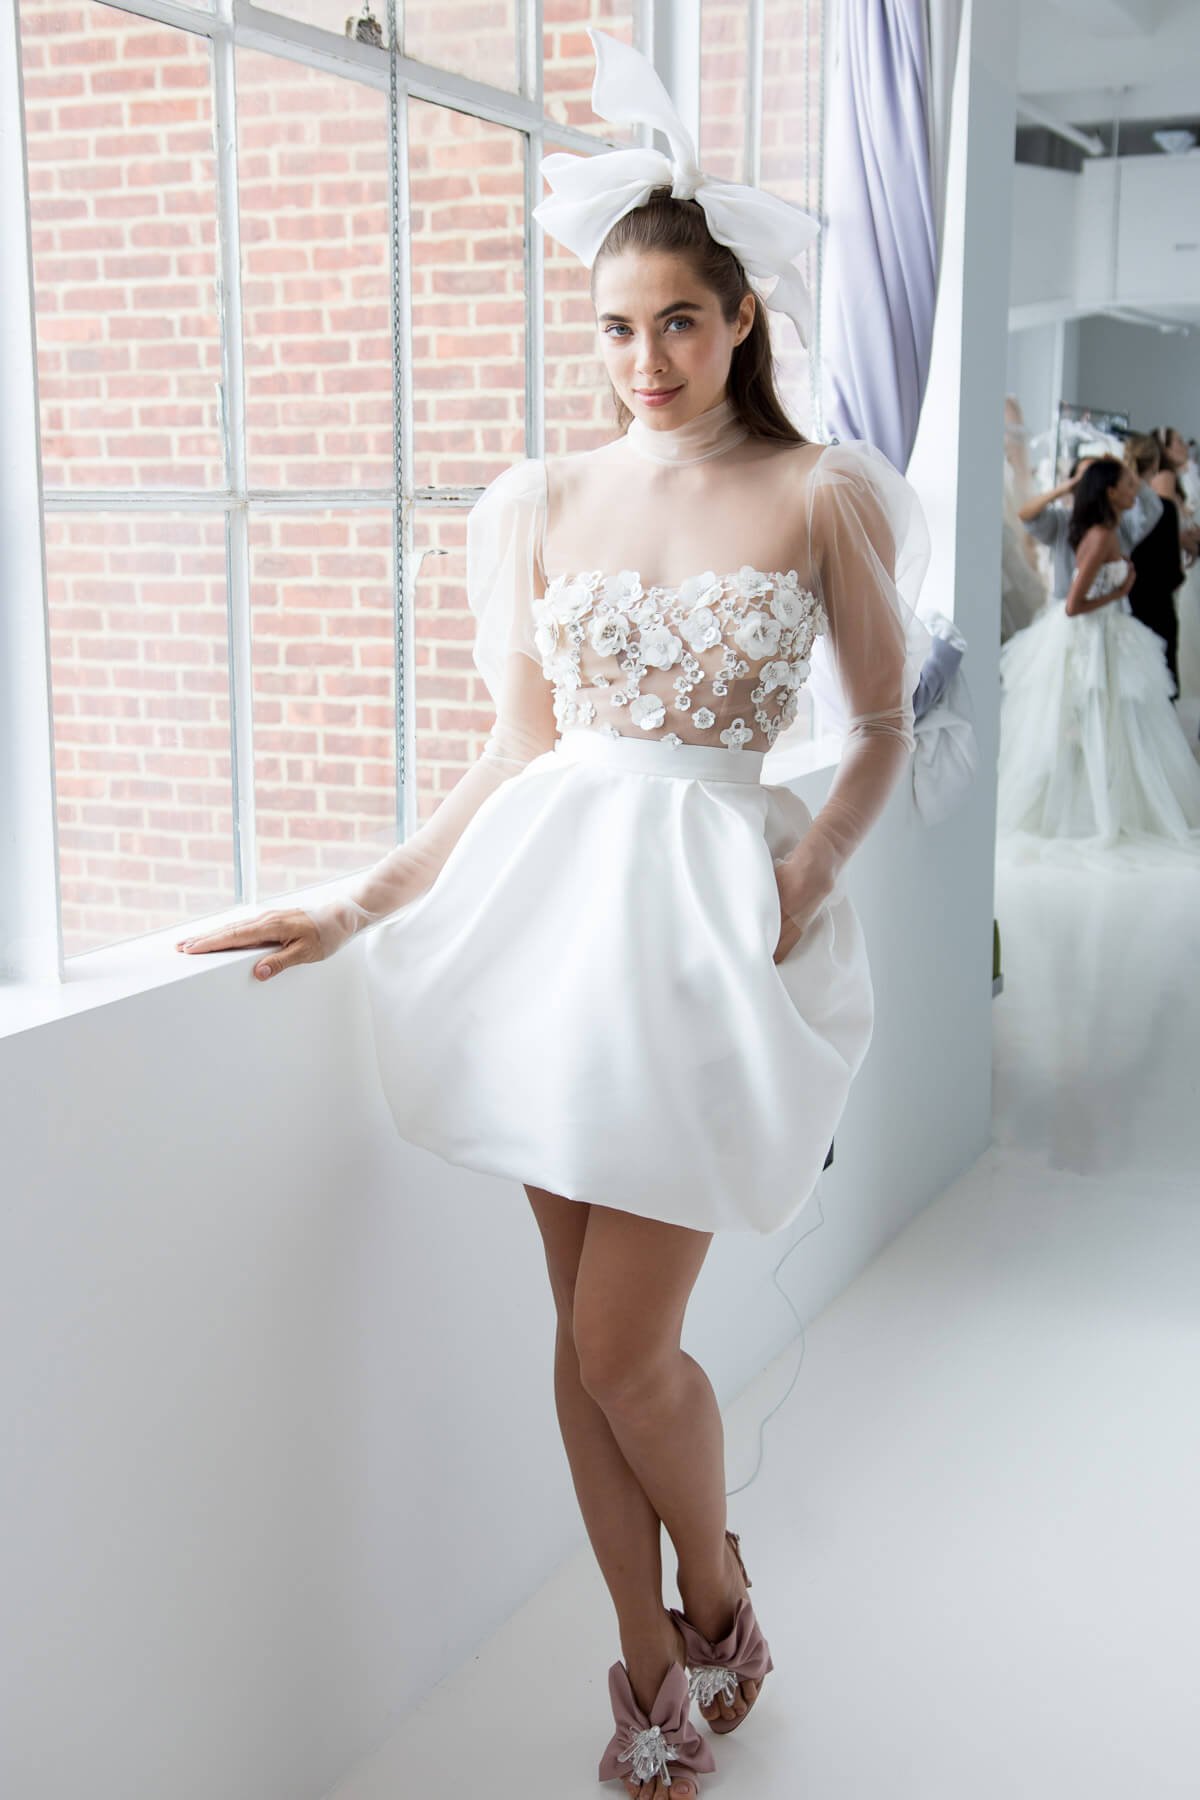 Morgan Newsom Galia Lahav wedding dress designer New York photographer-0661.jpg